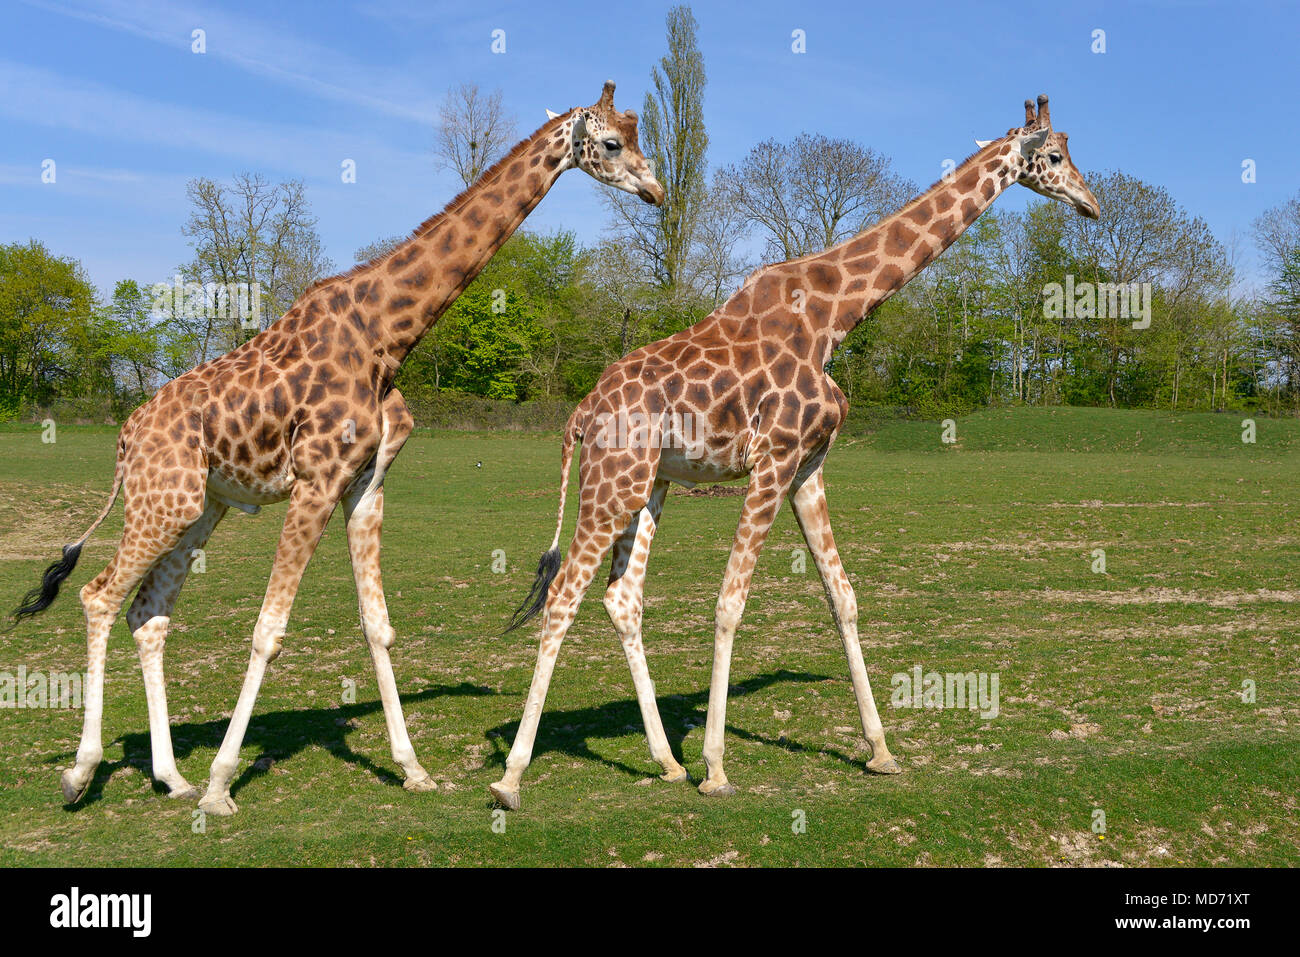 Two giraffes (Giraffa camelopardalis) walking on grass in single file Stock Photo